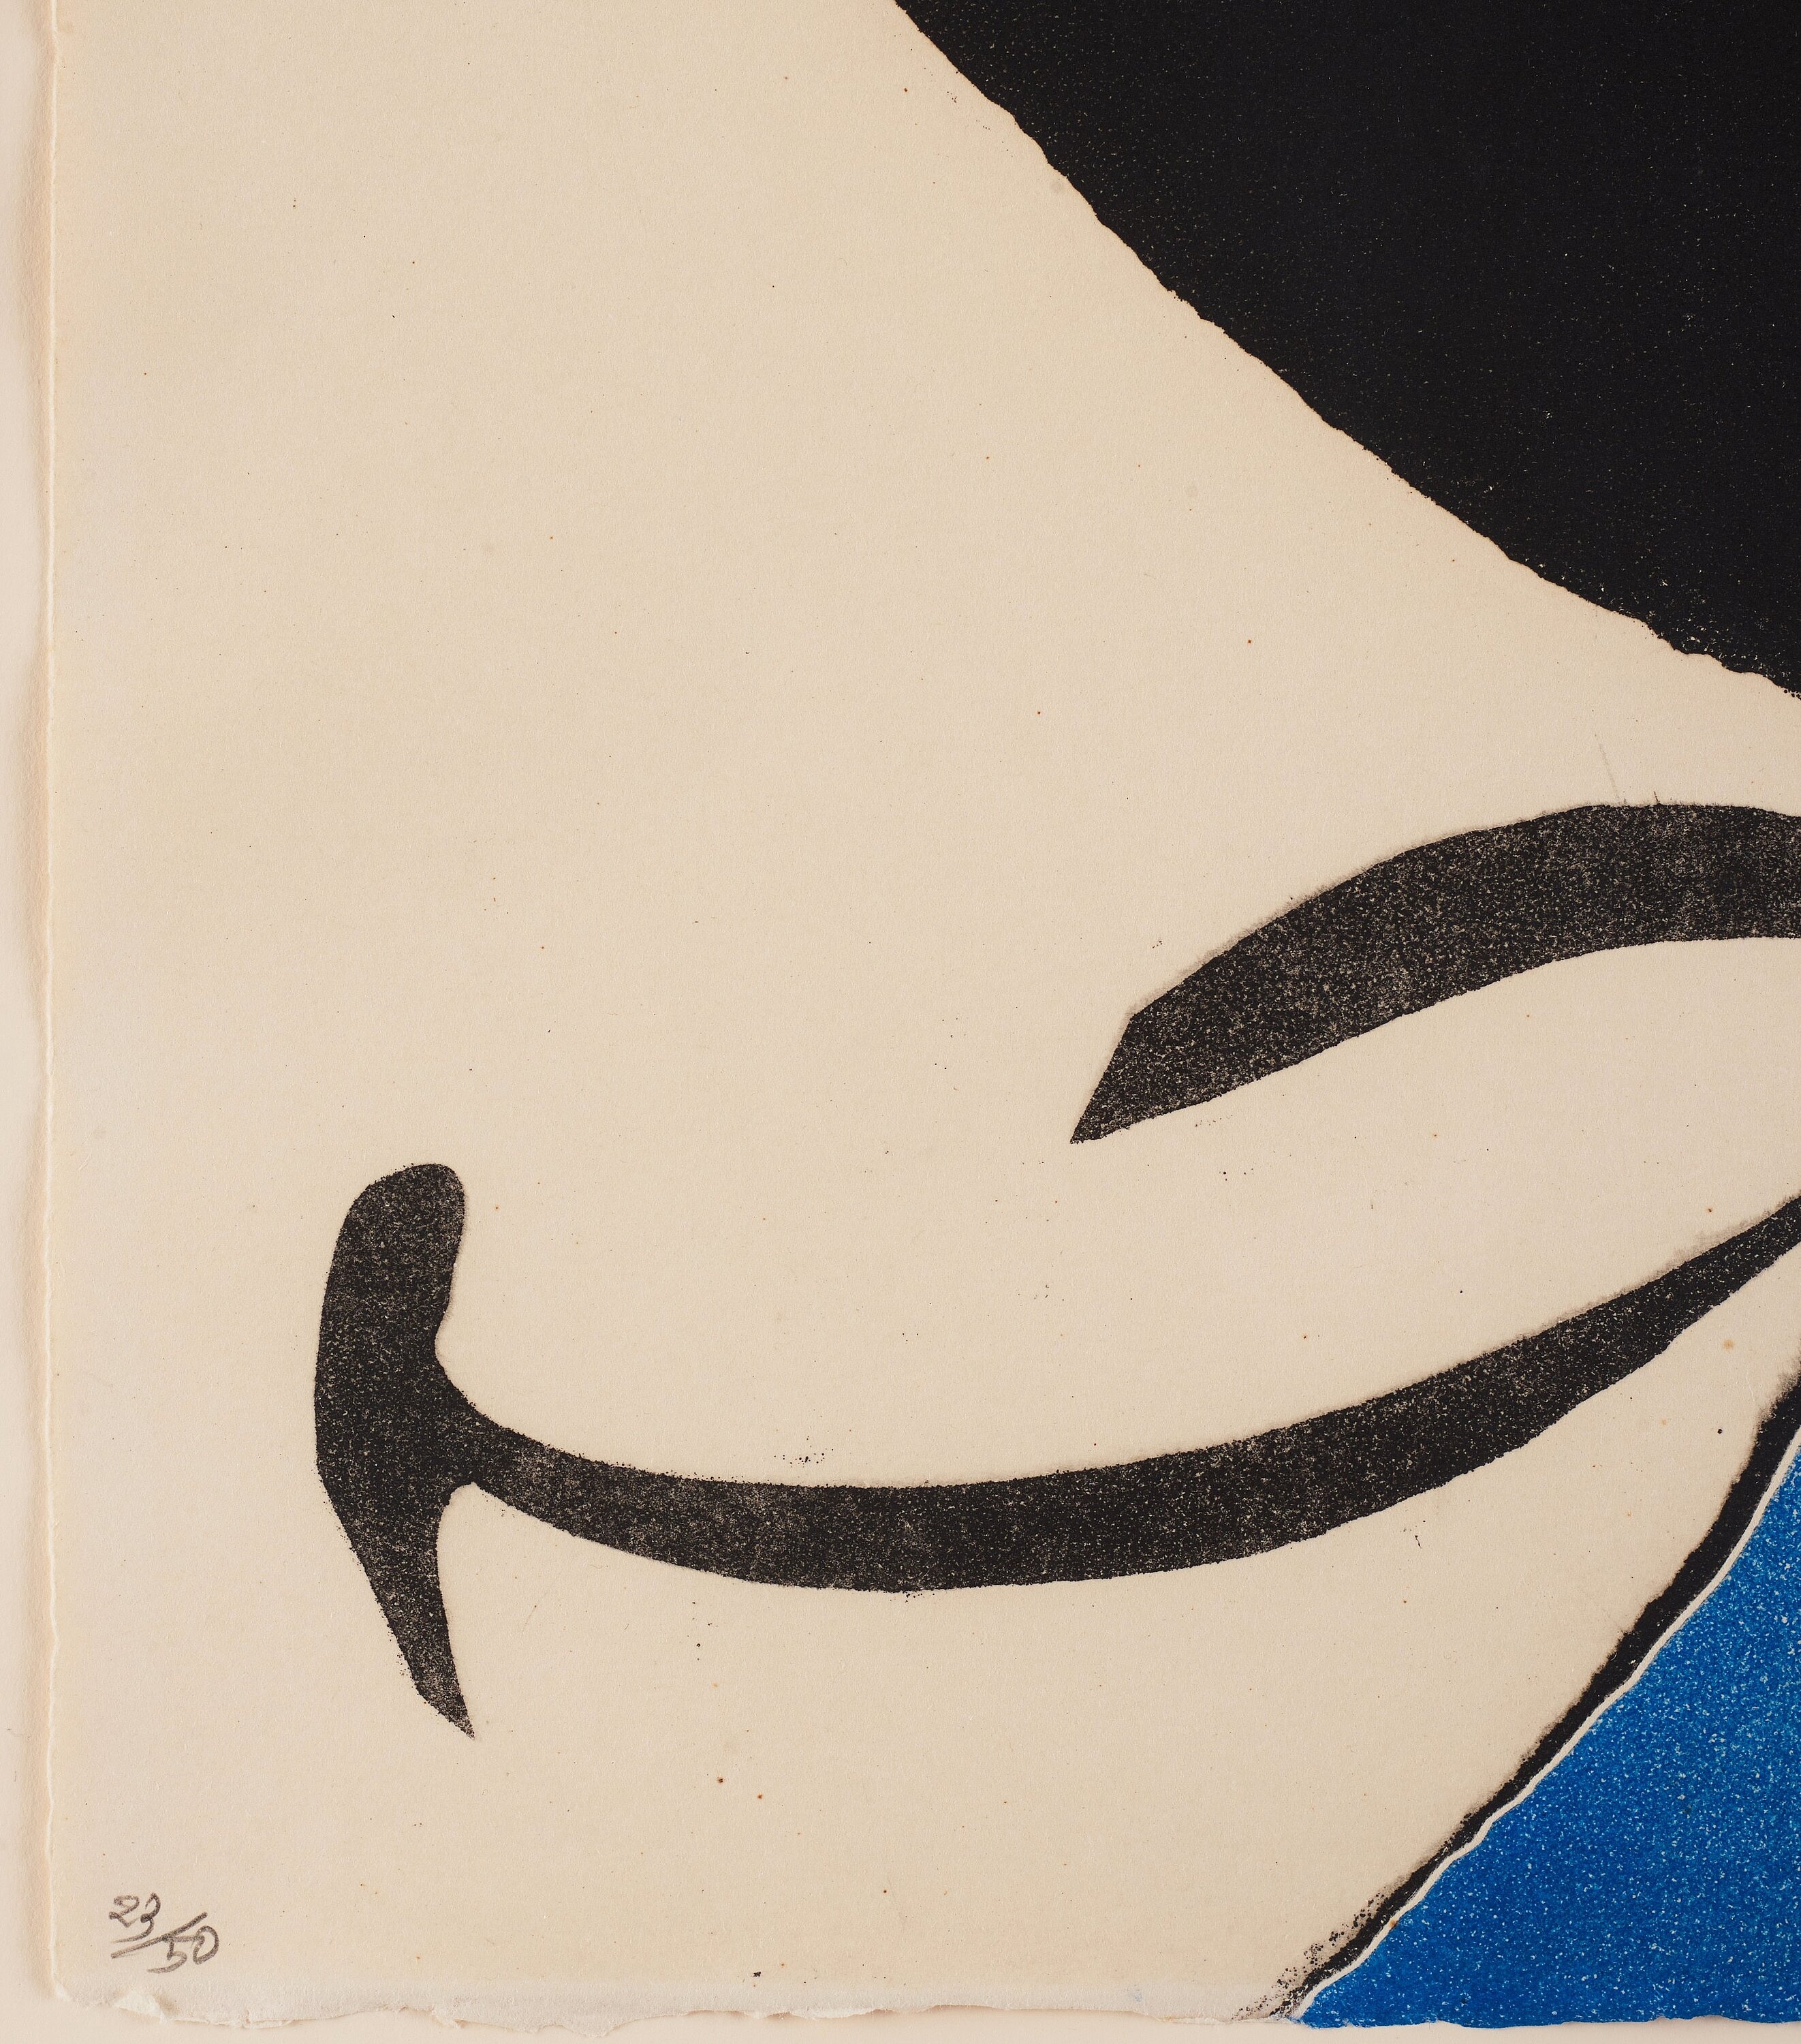 Artwork by Joan Miró, From: "Quatre Colors aparien el món"", Made of Etching and aquatint in colour